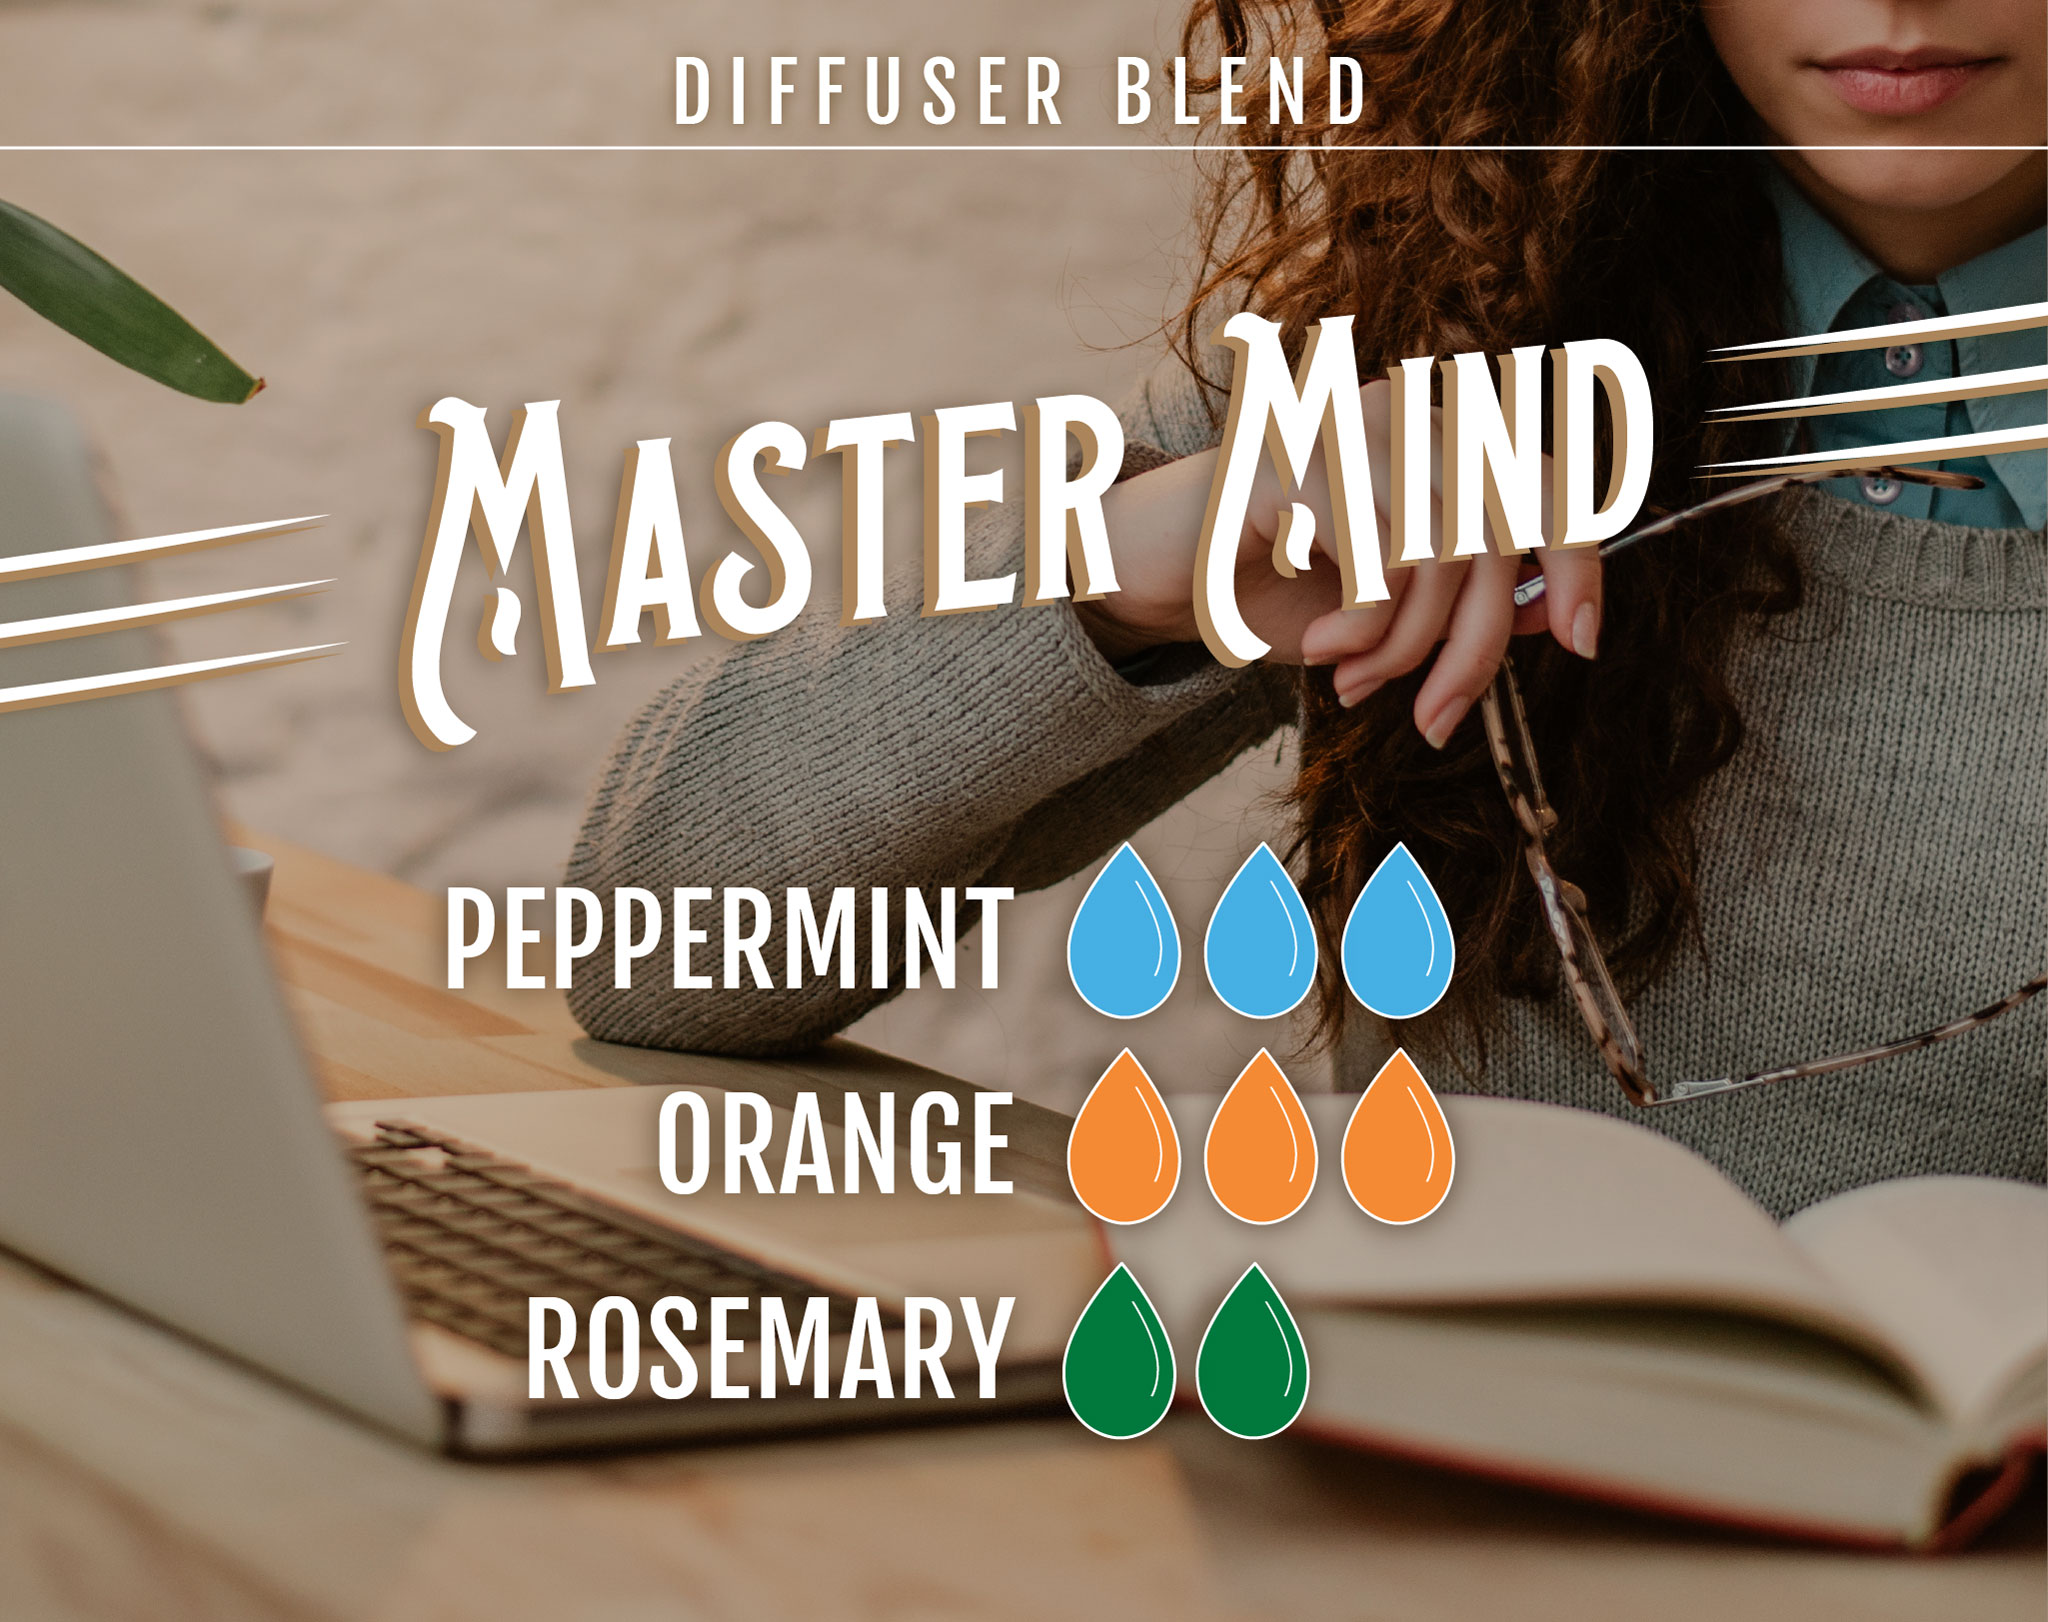 Master Mind Essential Oil (EO) Diffuser Blend: 3 drops Peppermint EO, 3 drops Orange EO, 2 drops Rosemary